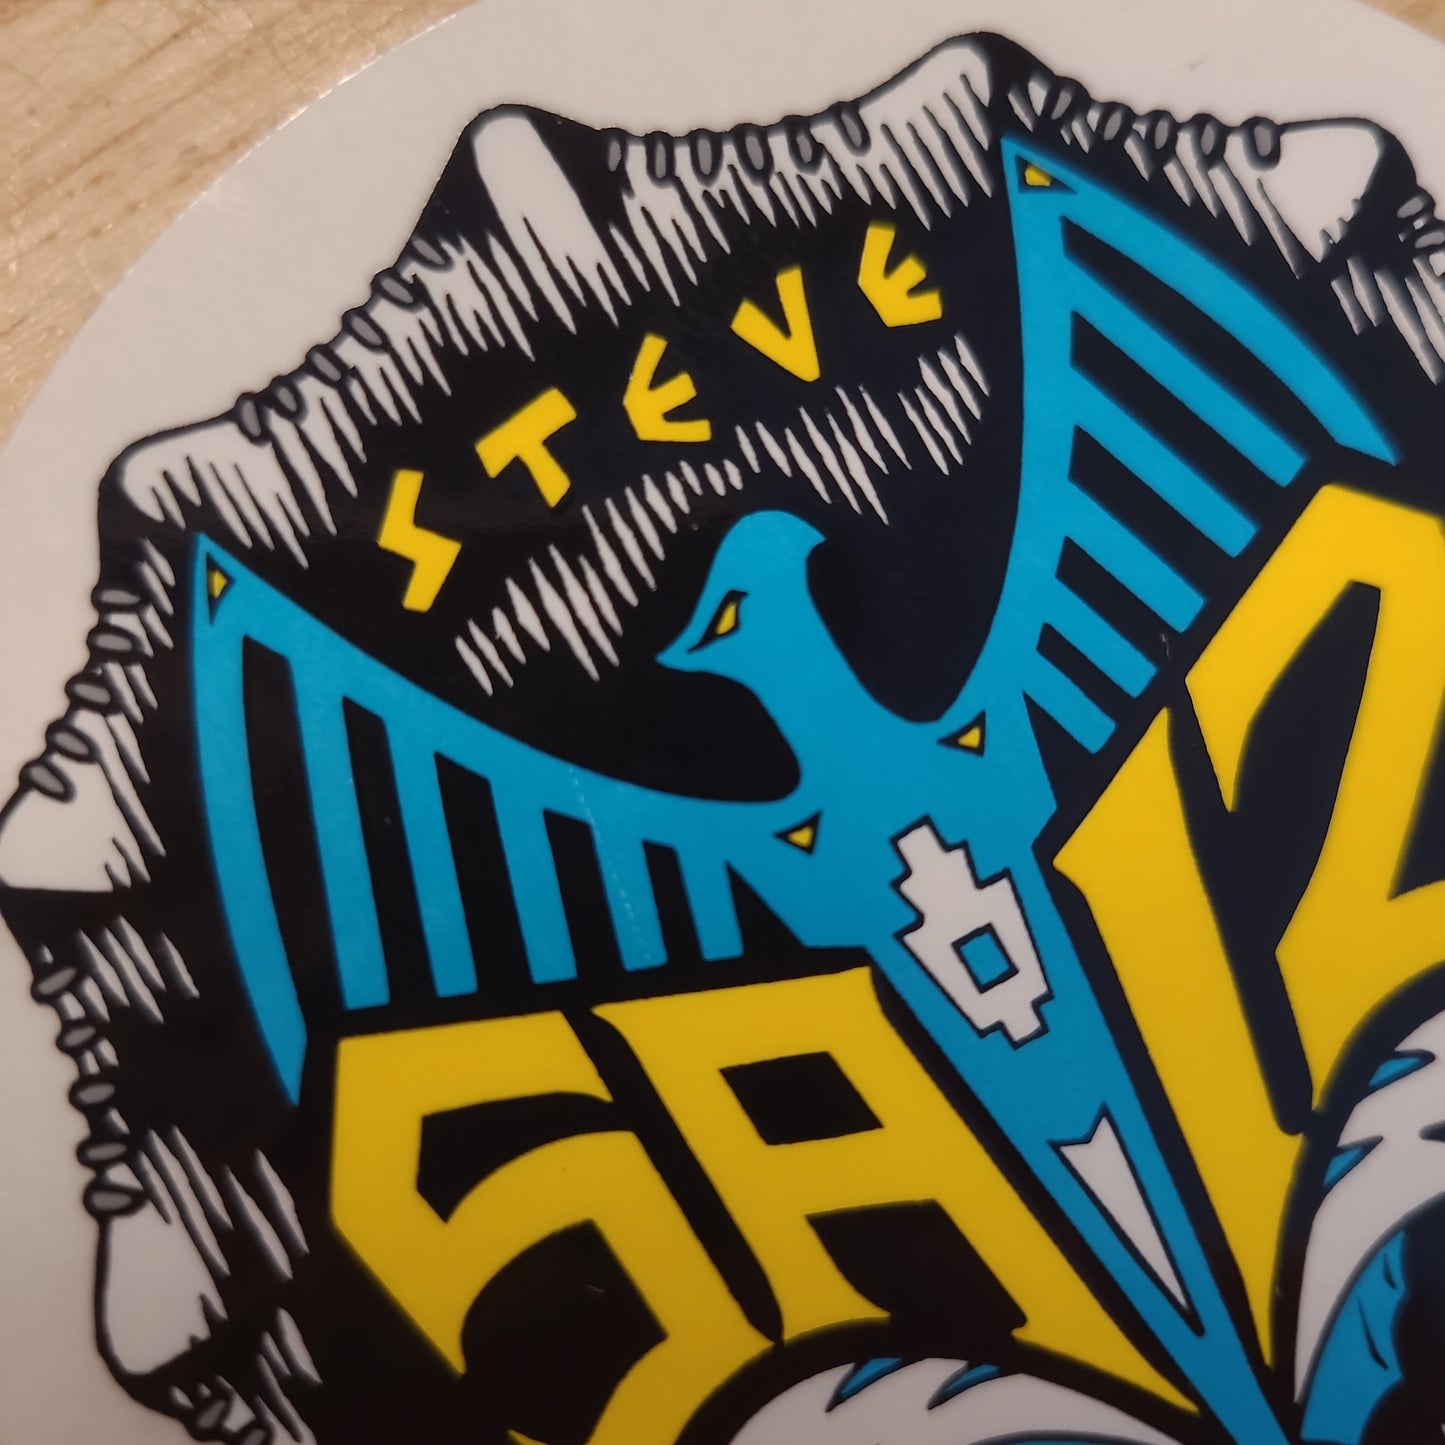 Powell & Peralta Stickers - Steve Saiz